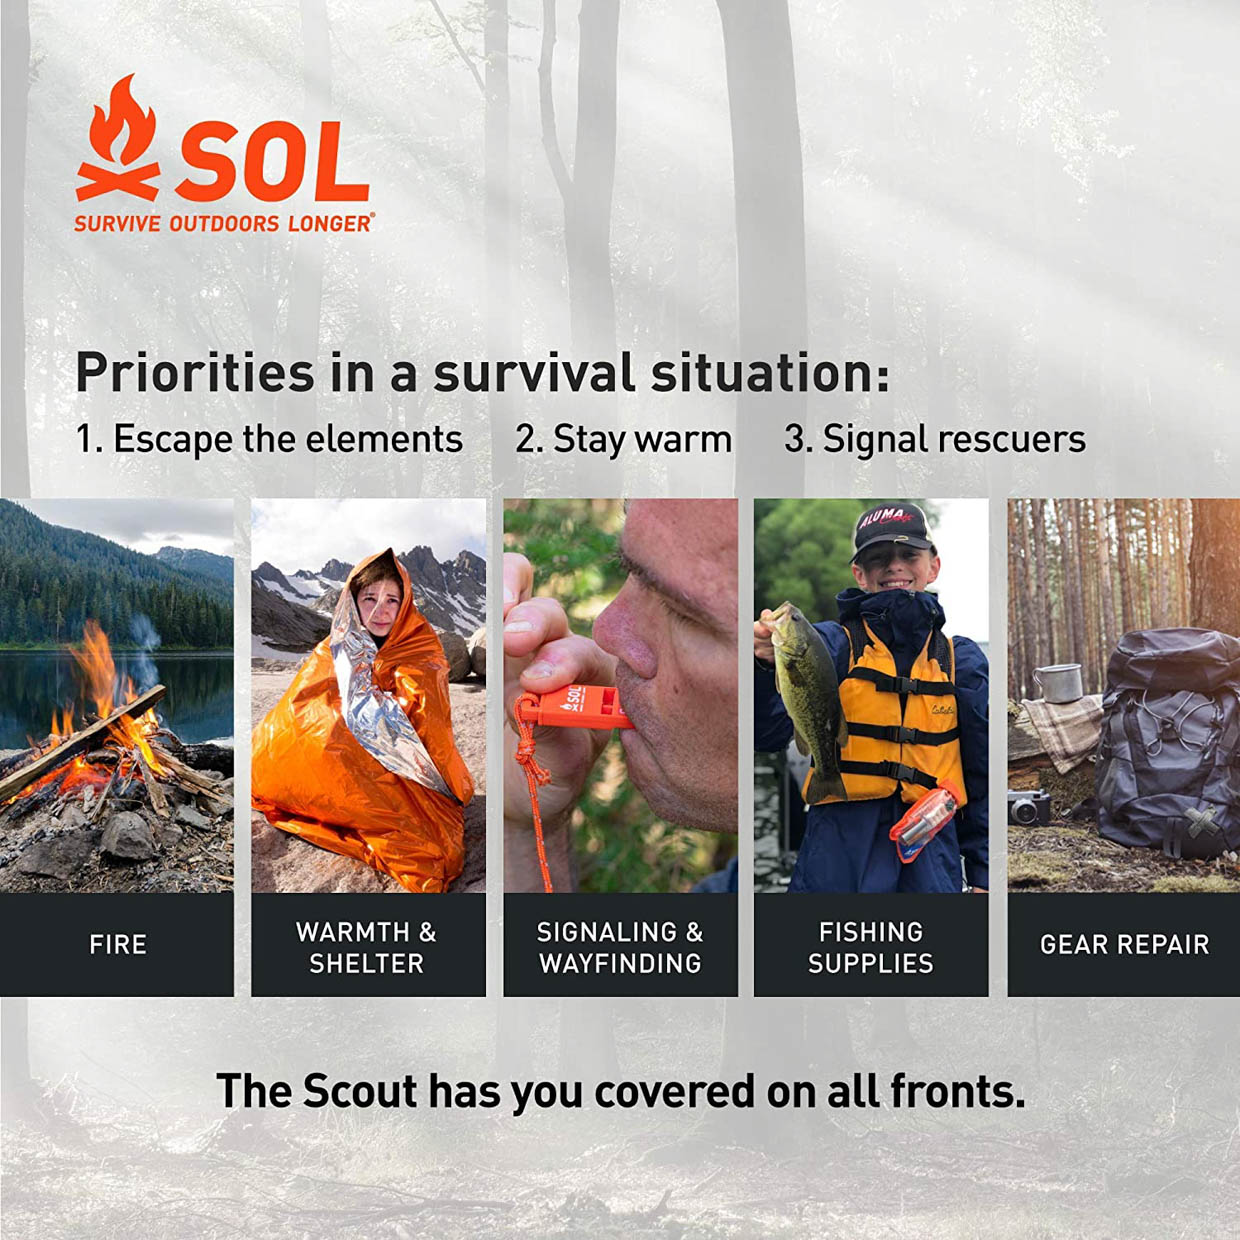 S.O.L. Scout Survival Kit